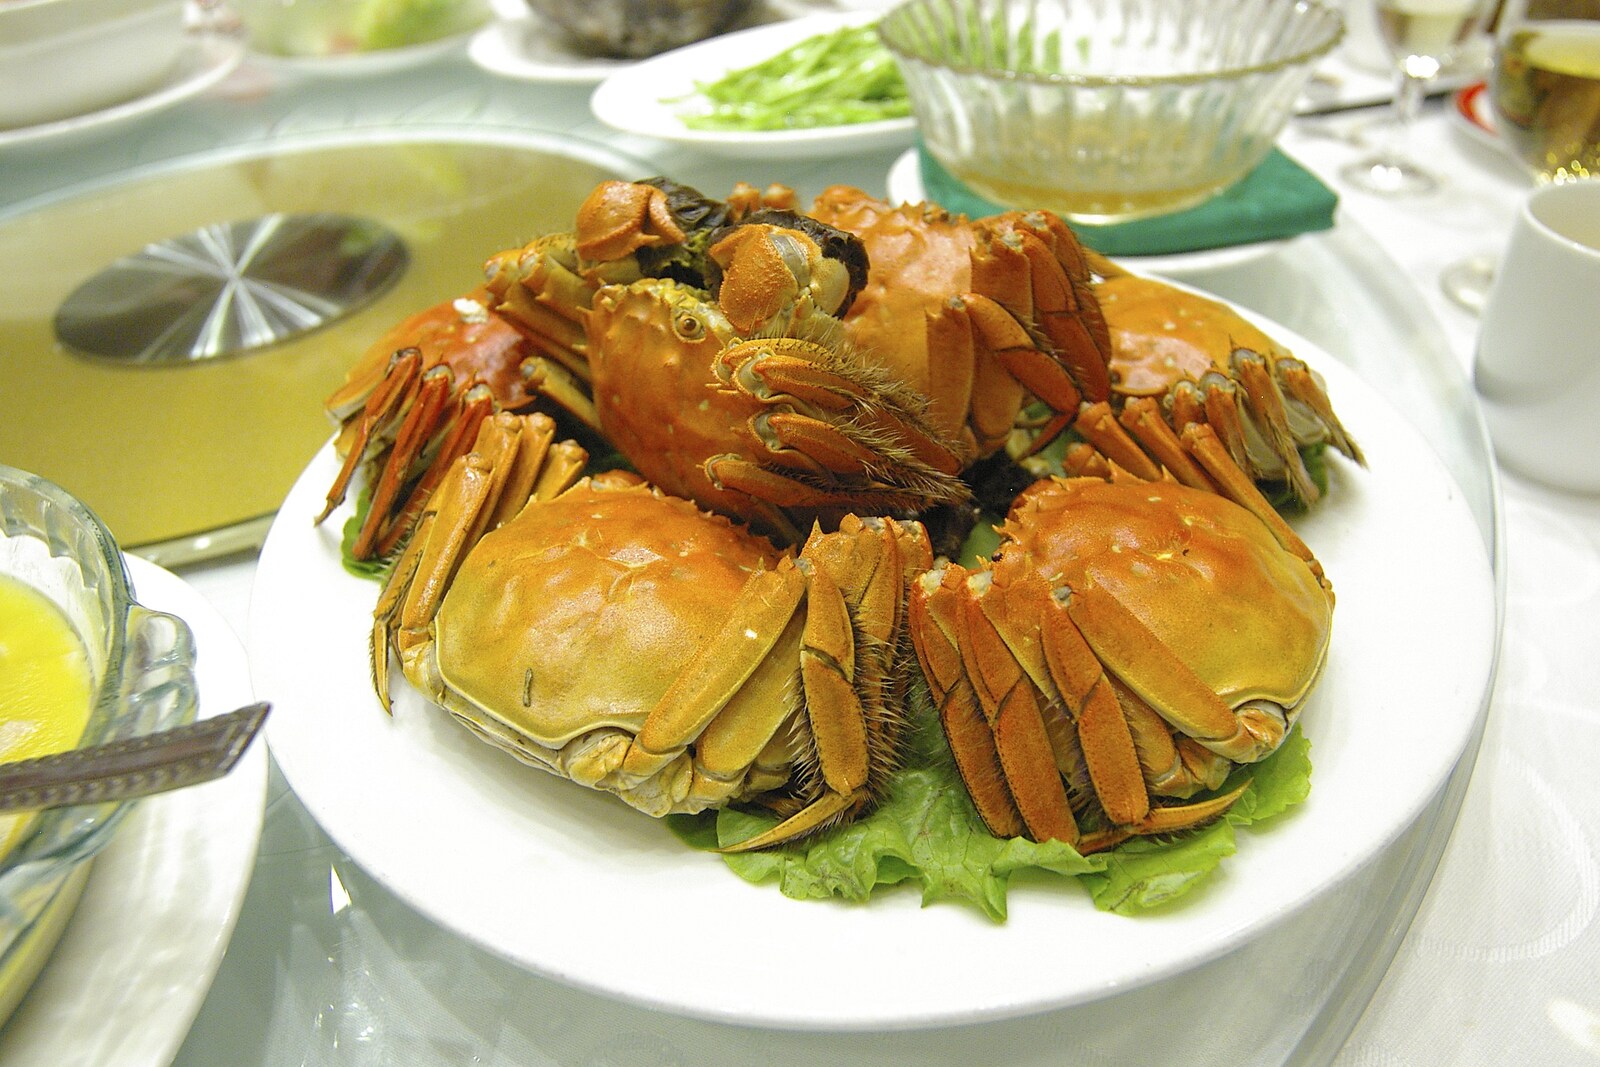 There's fresh local hairy crab  from Nanjing by Night, Nanjing, Jiangsu Province, China - 4th October 2006